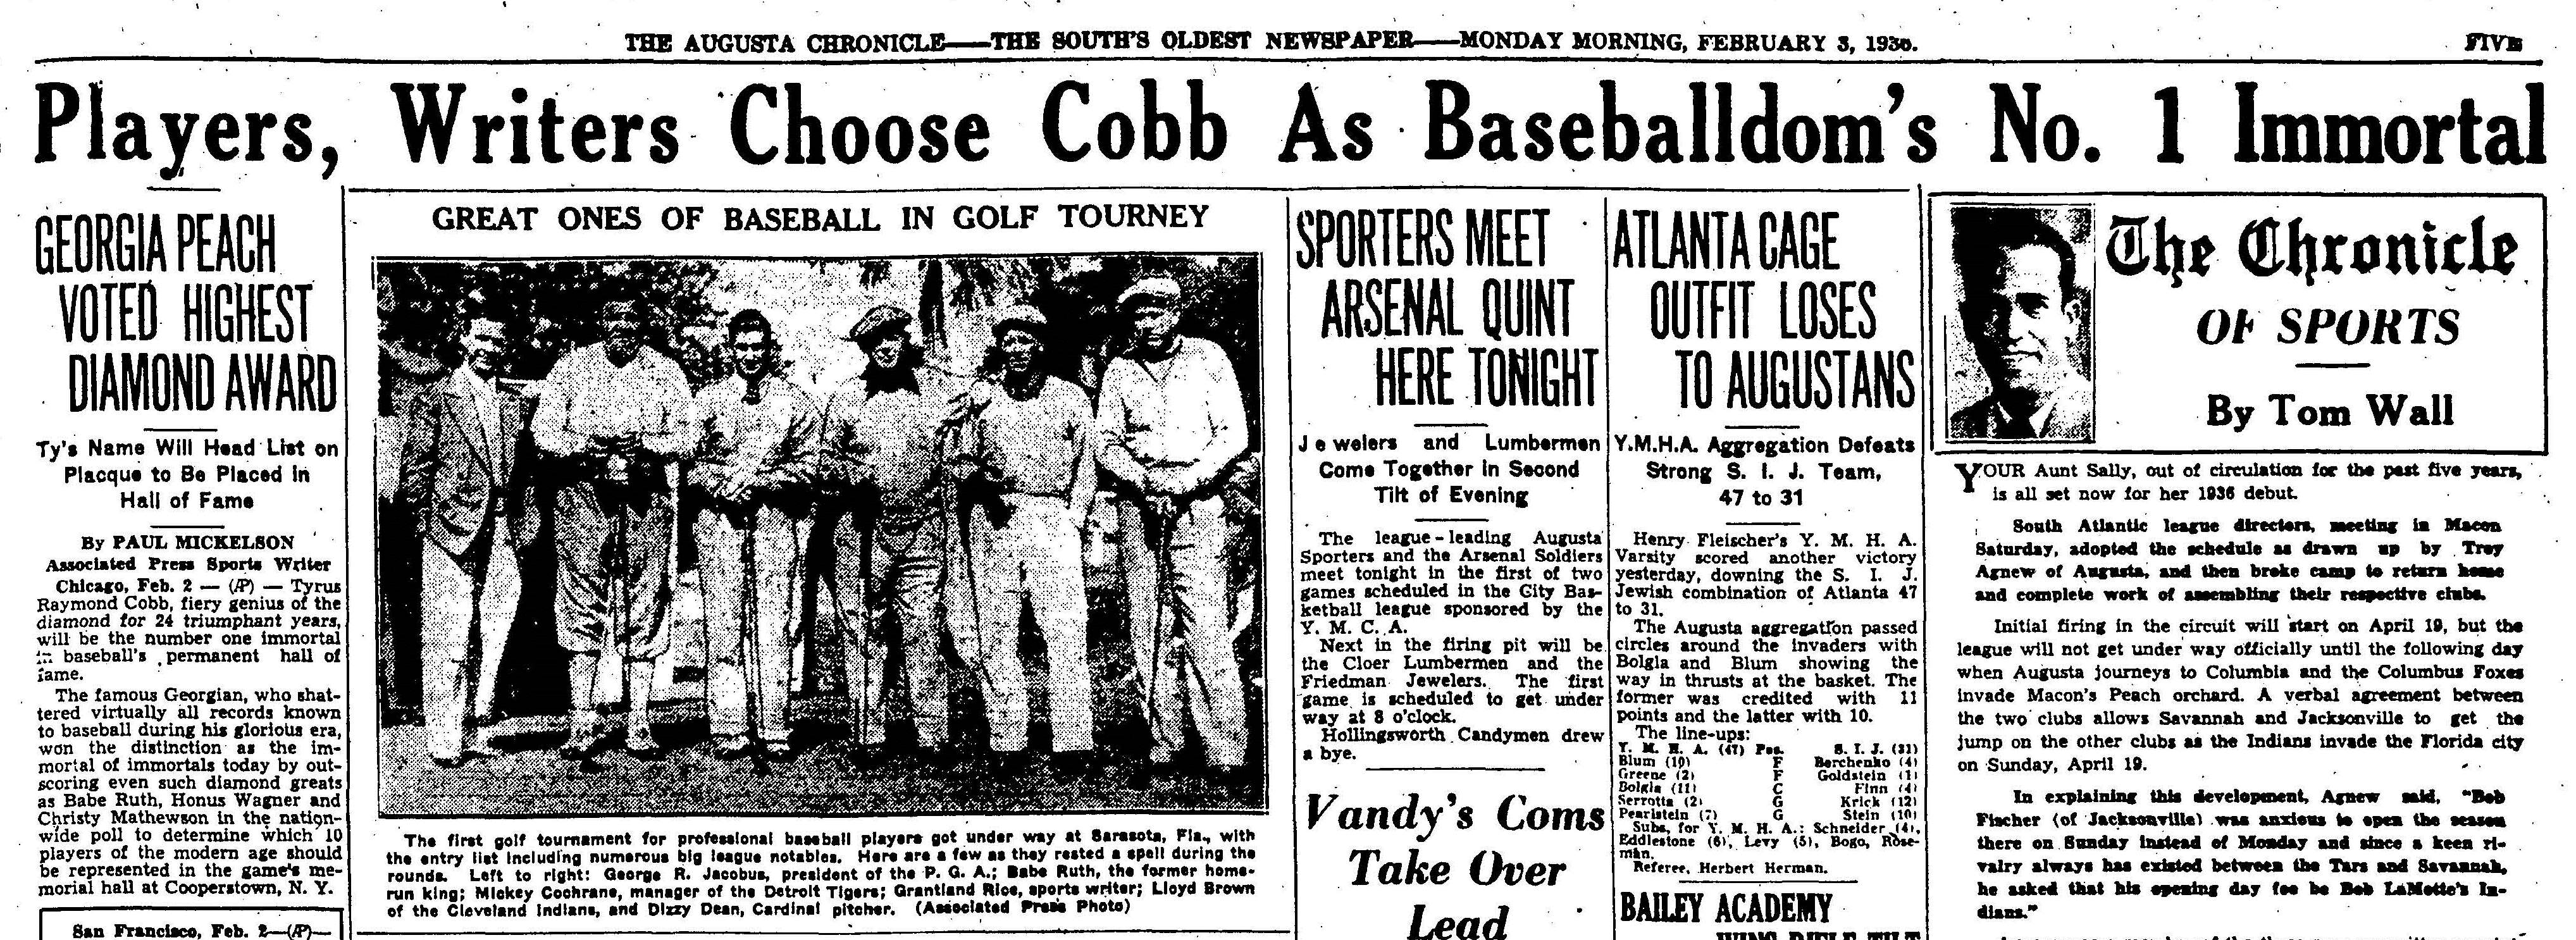 Augusta (Georgia) Chronicle (Feb. 3, 1936)